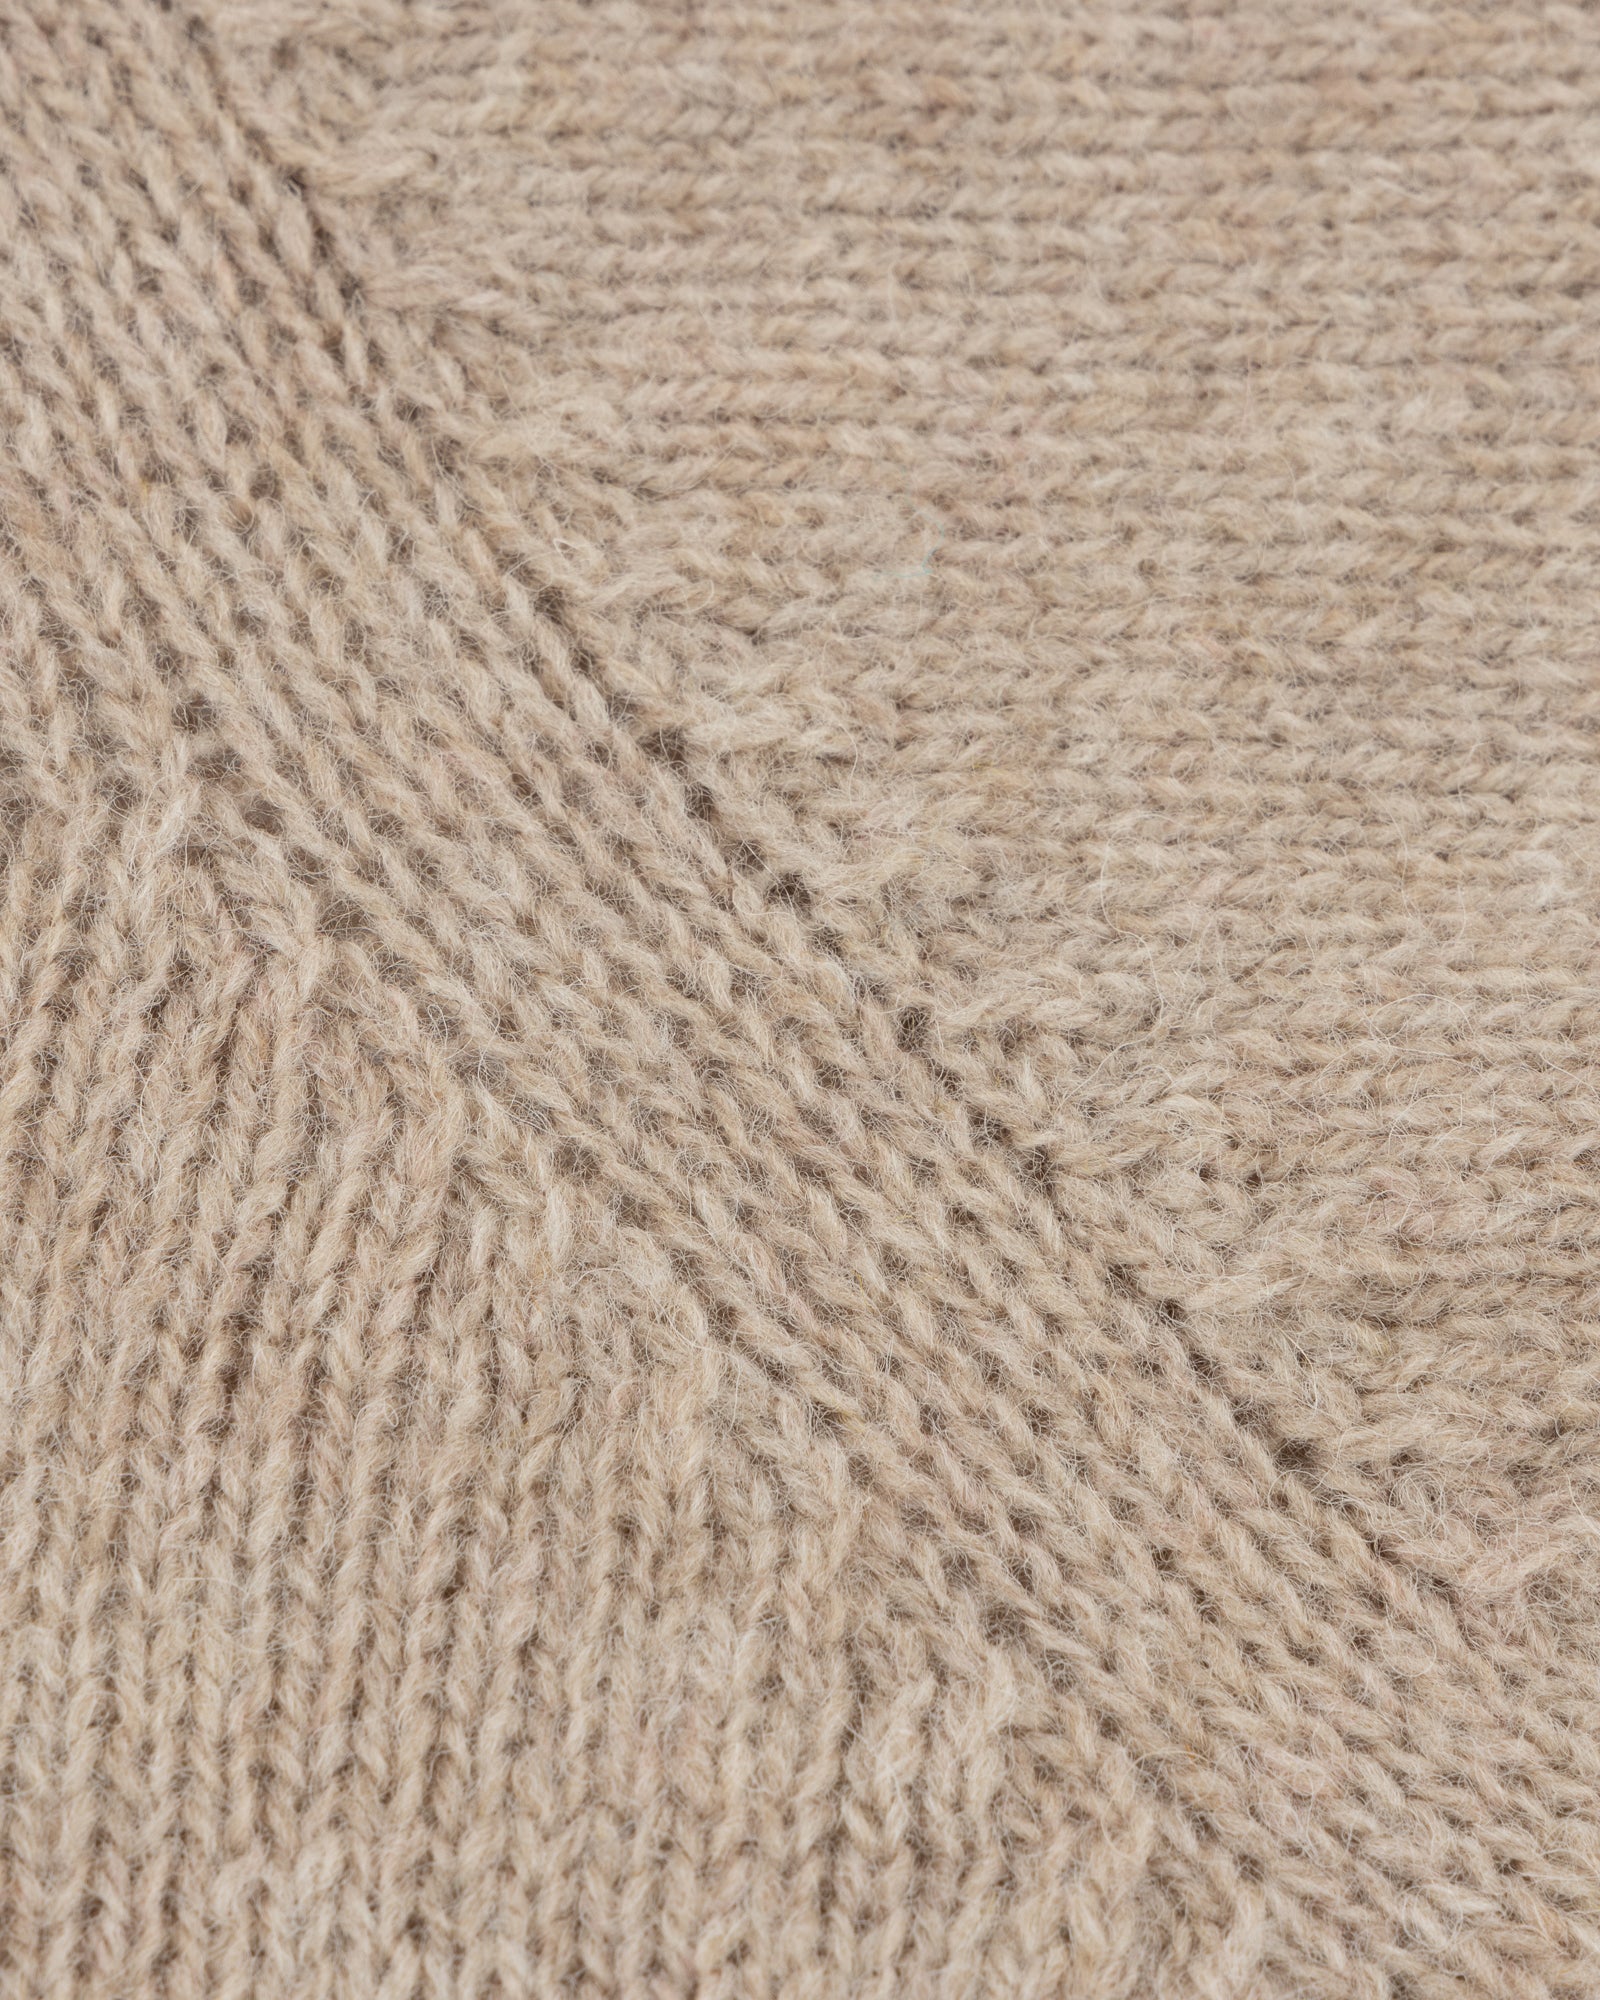 Shetland Wool Crew Neck Sweater - Taupe